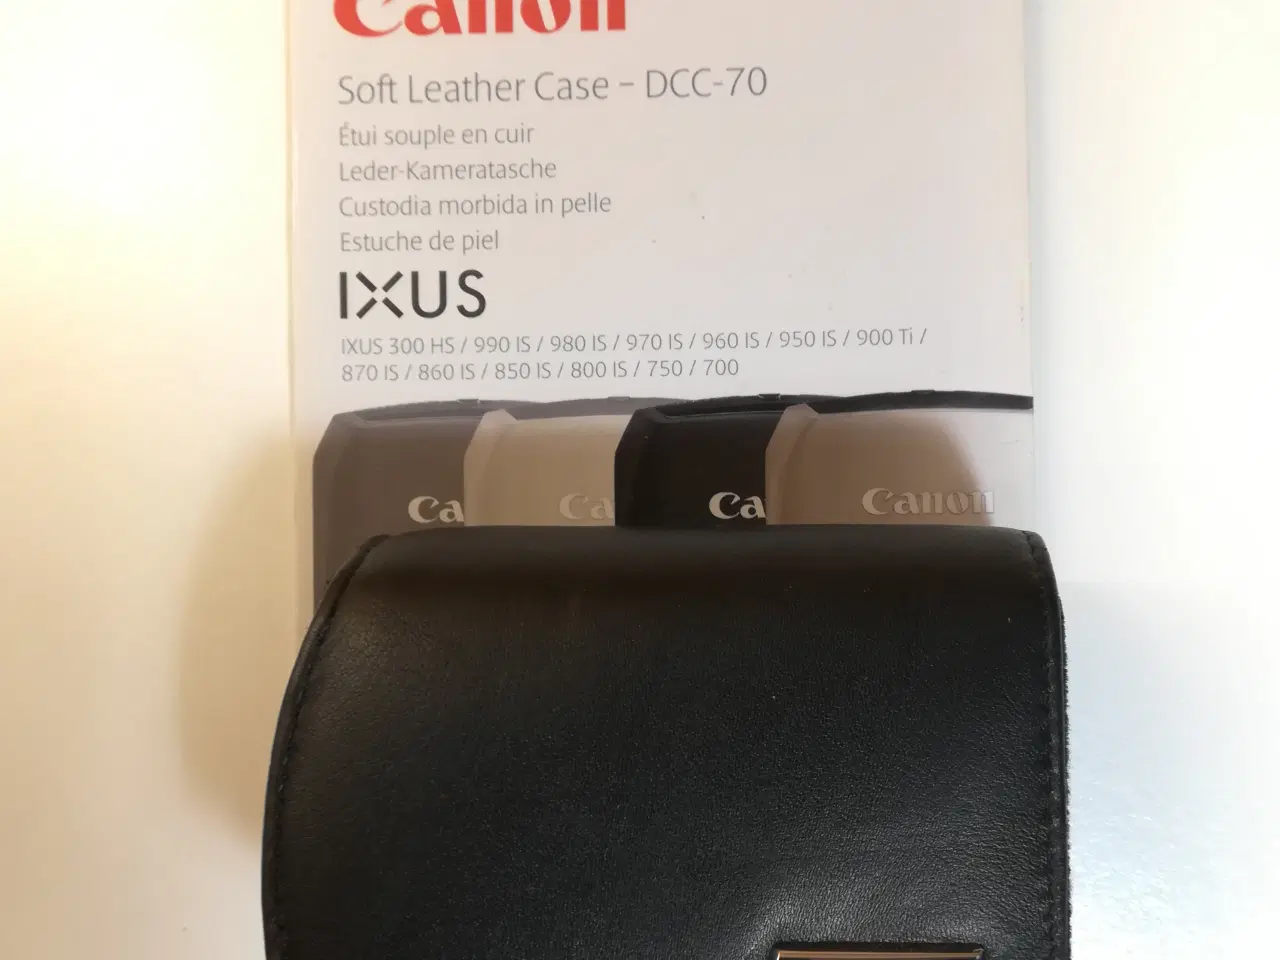 Billede 2 - Canon Soft Leather Case - DCC-70                  